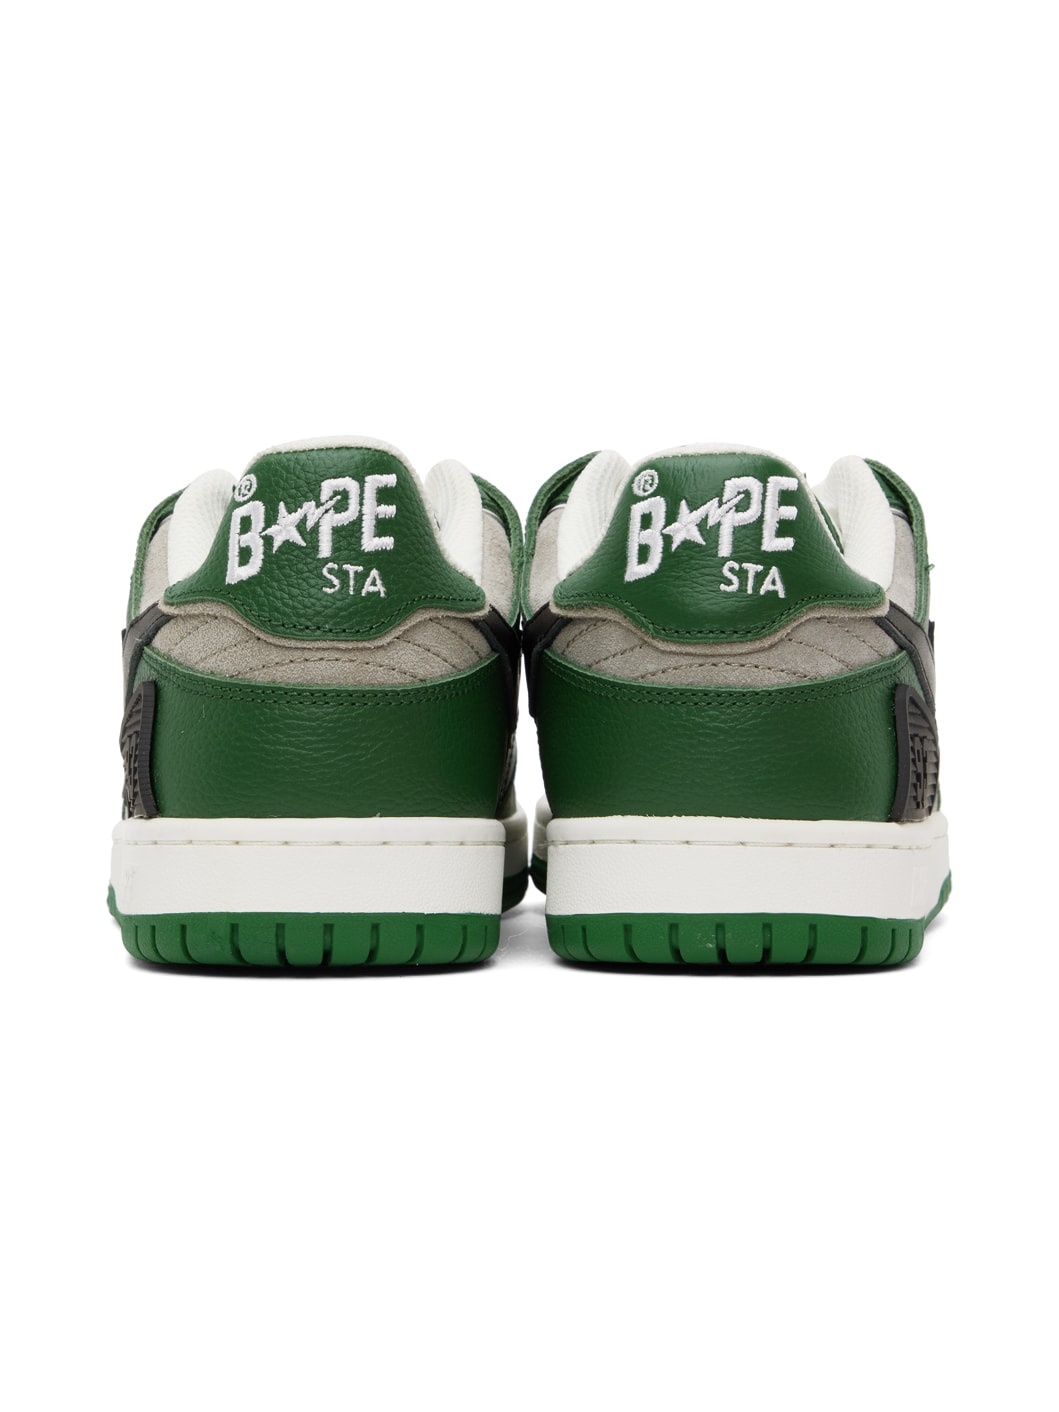 Green SK8 Sta #1 Sneakers - 2